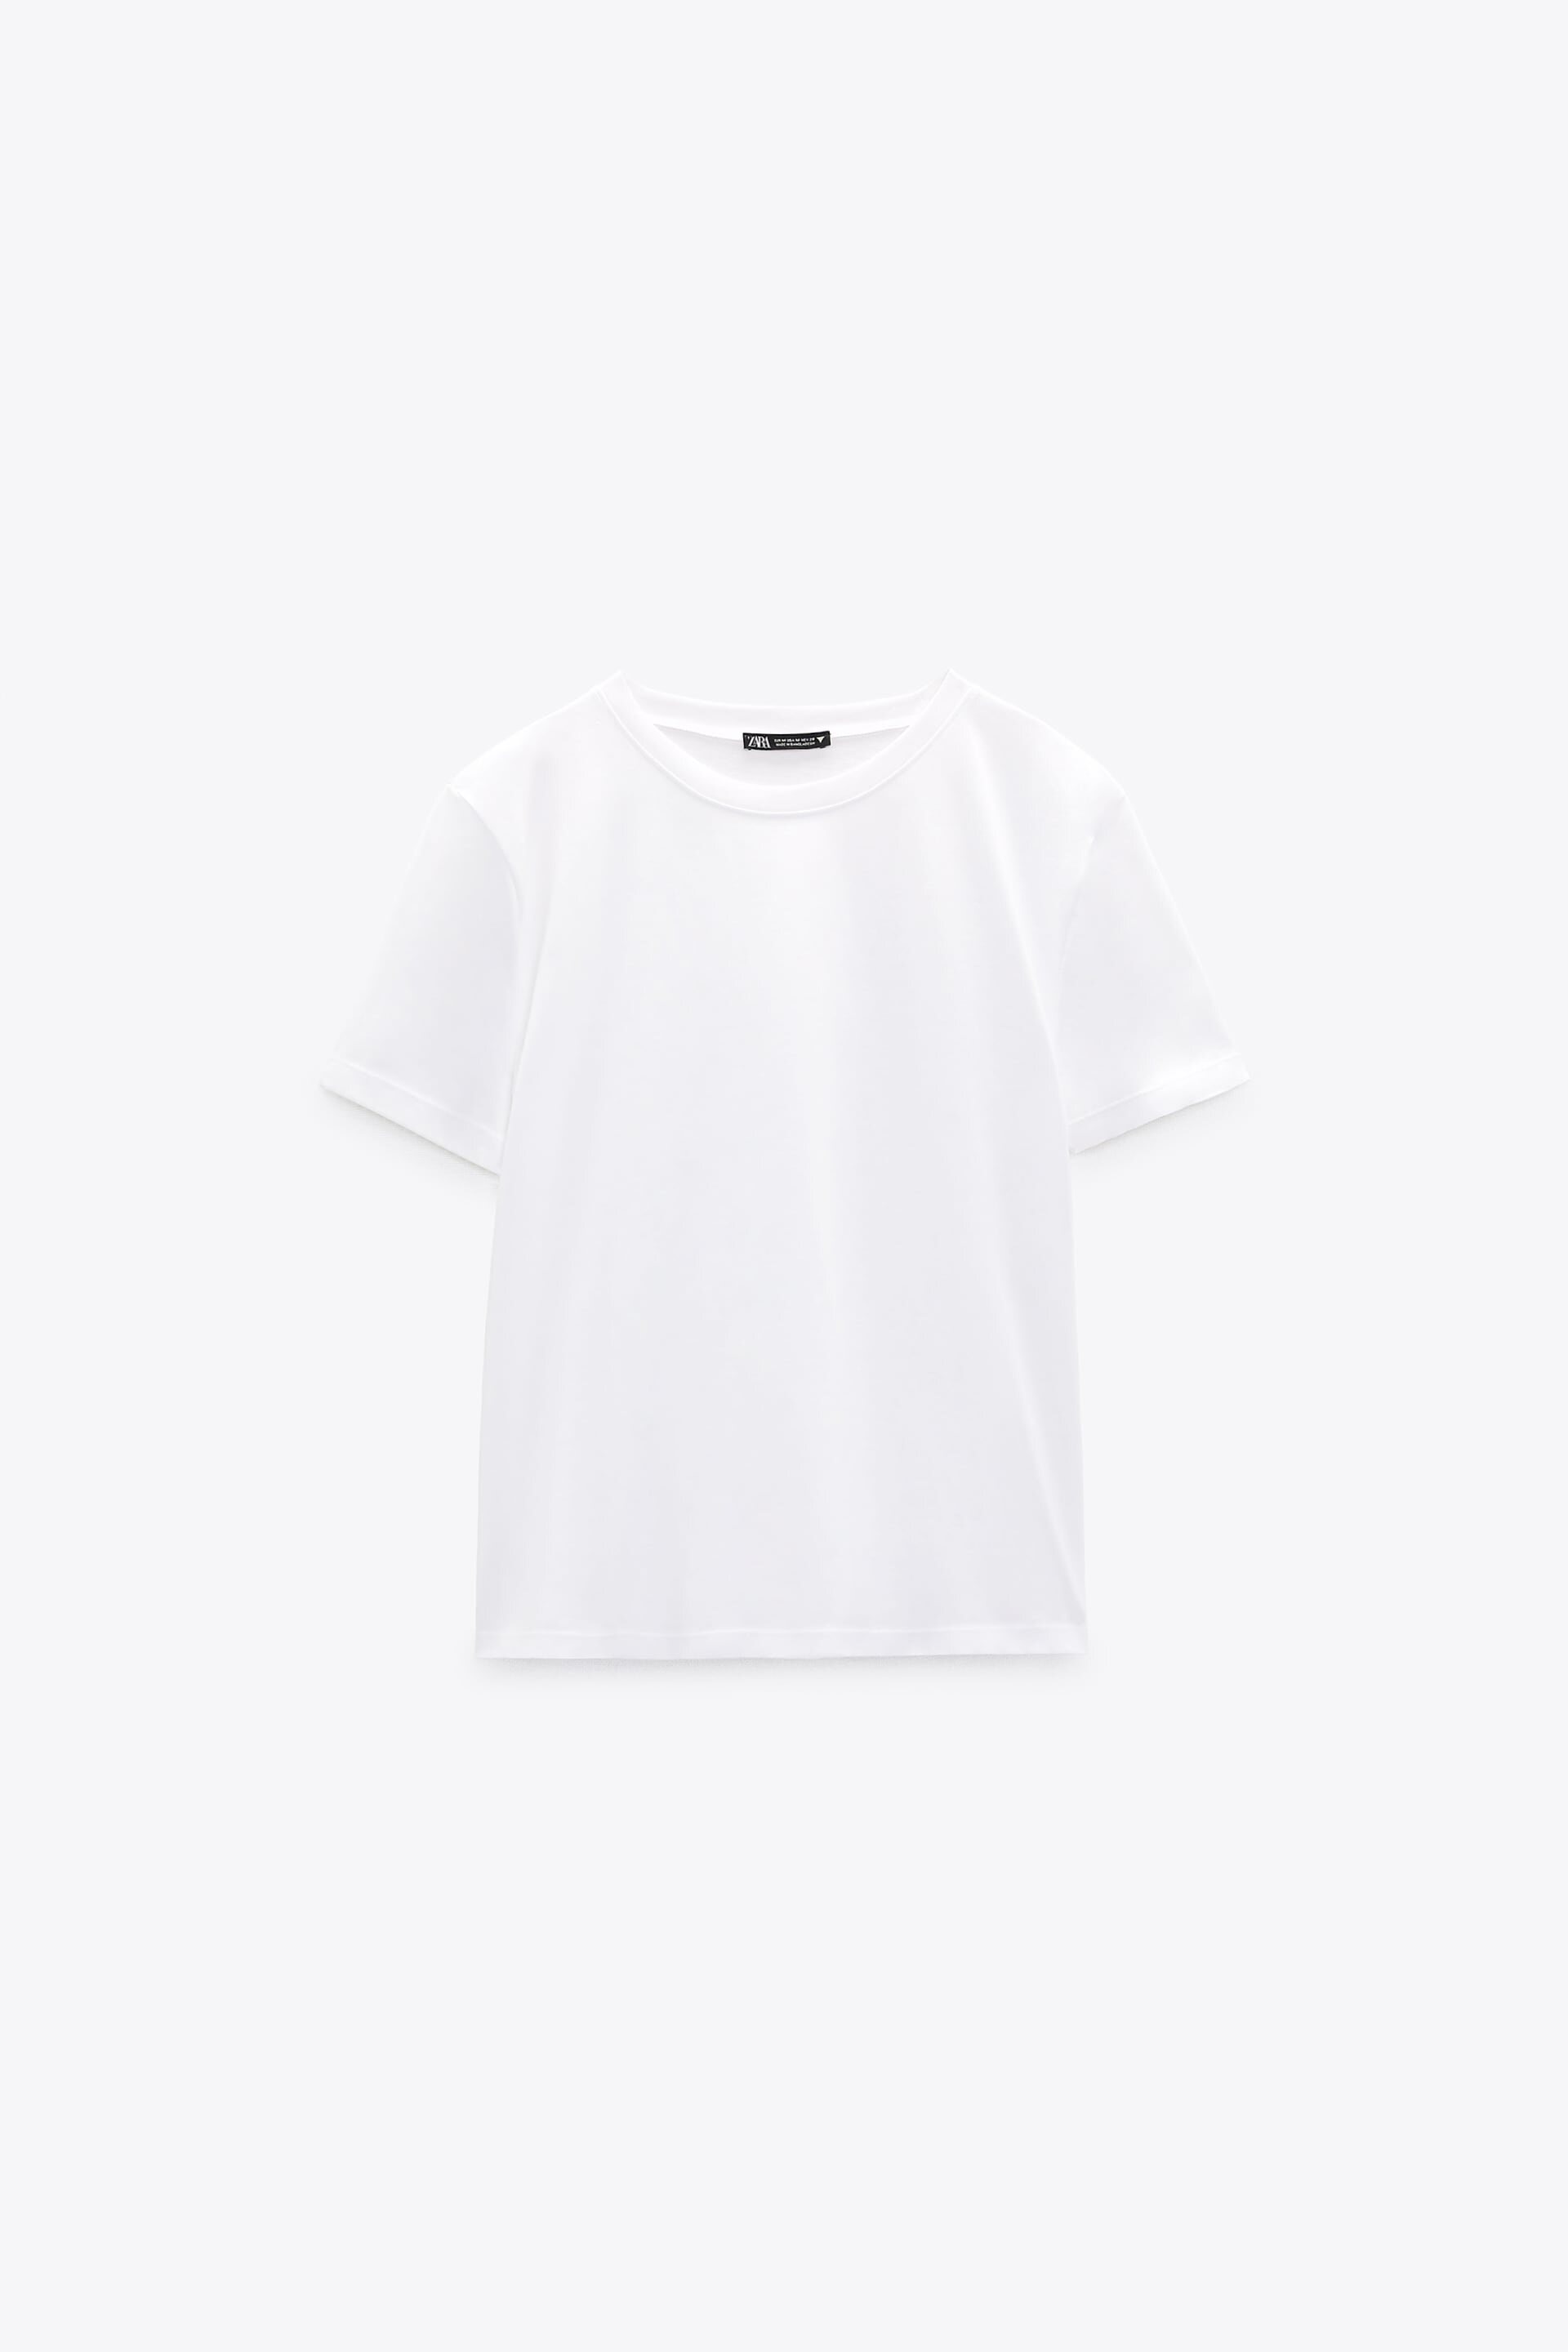 Camiseta blanca básica de algodón: 5,95€ | Foto: Zara